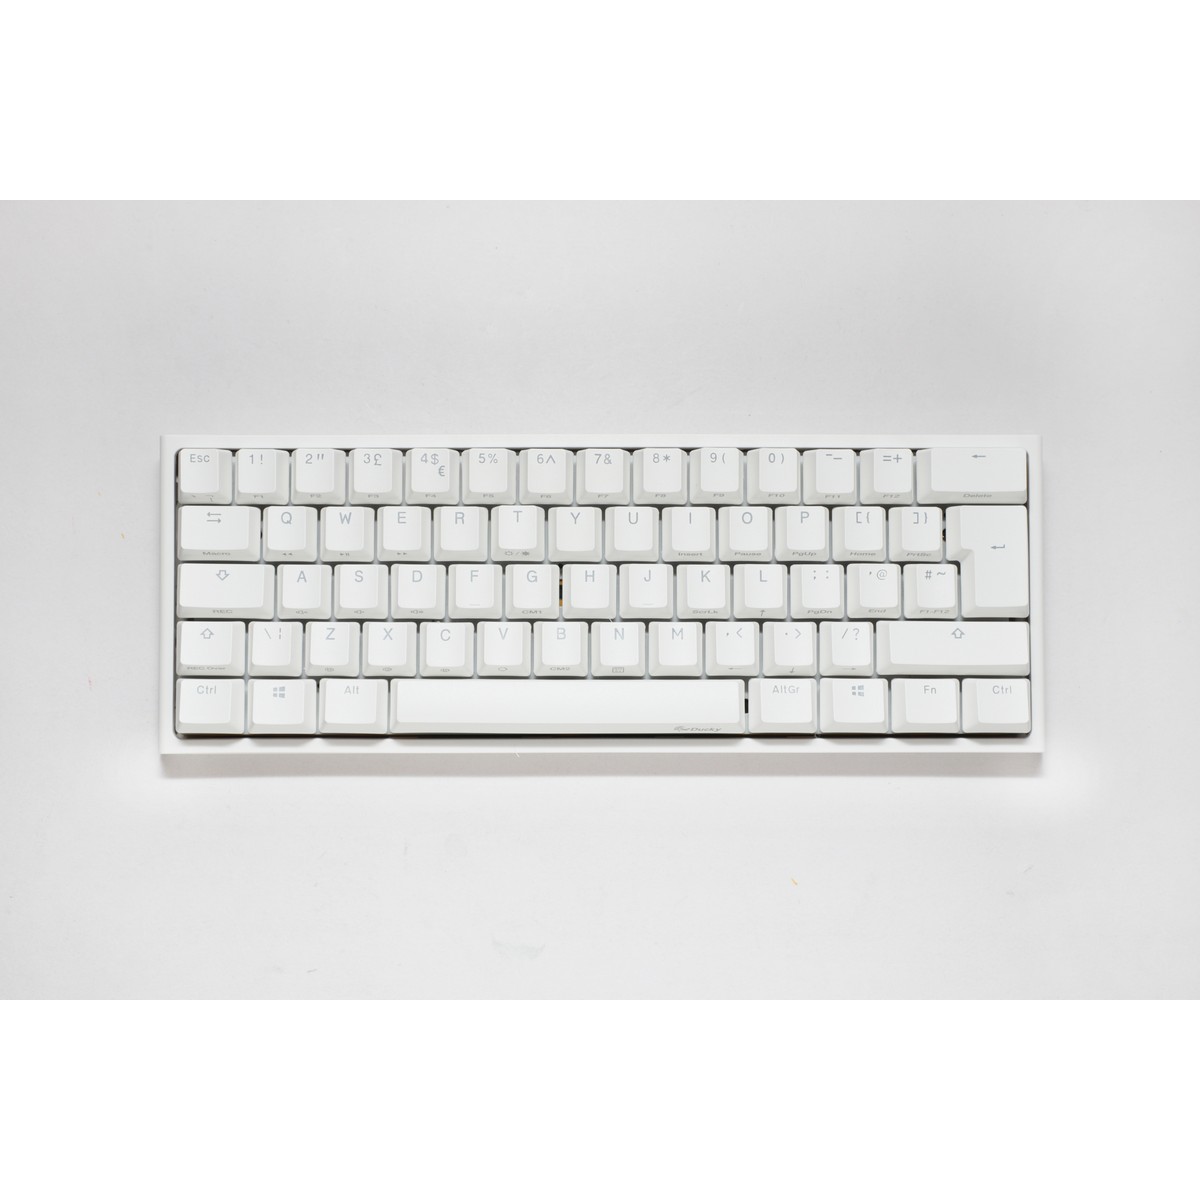 Ducky - Ducky One 2 Pro Mini 60% Mechanical Gaming Keyboard MX Cherry Blue Switch White Frame - UK Layout